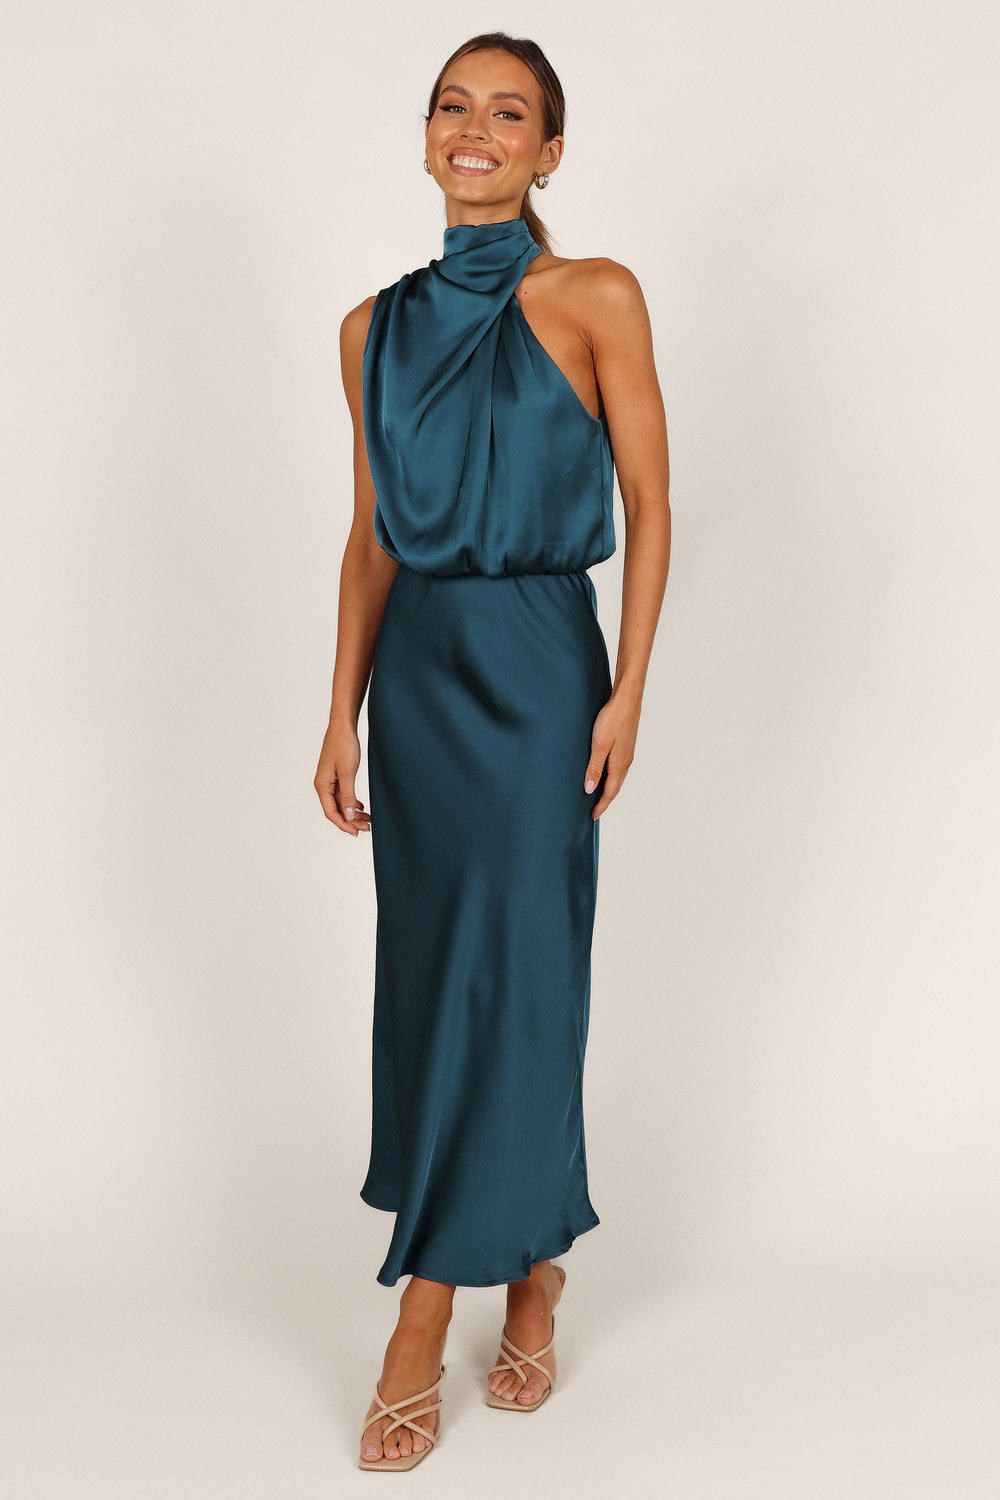 Shop Formal Dress - Anabelle Halter Neck Midi Dress - Teal sixth image